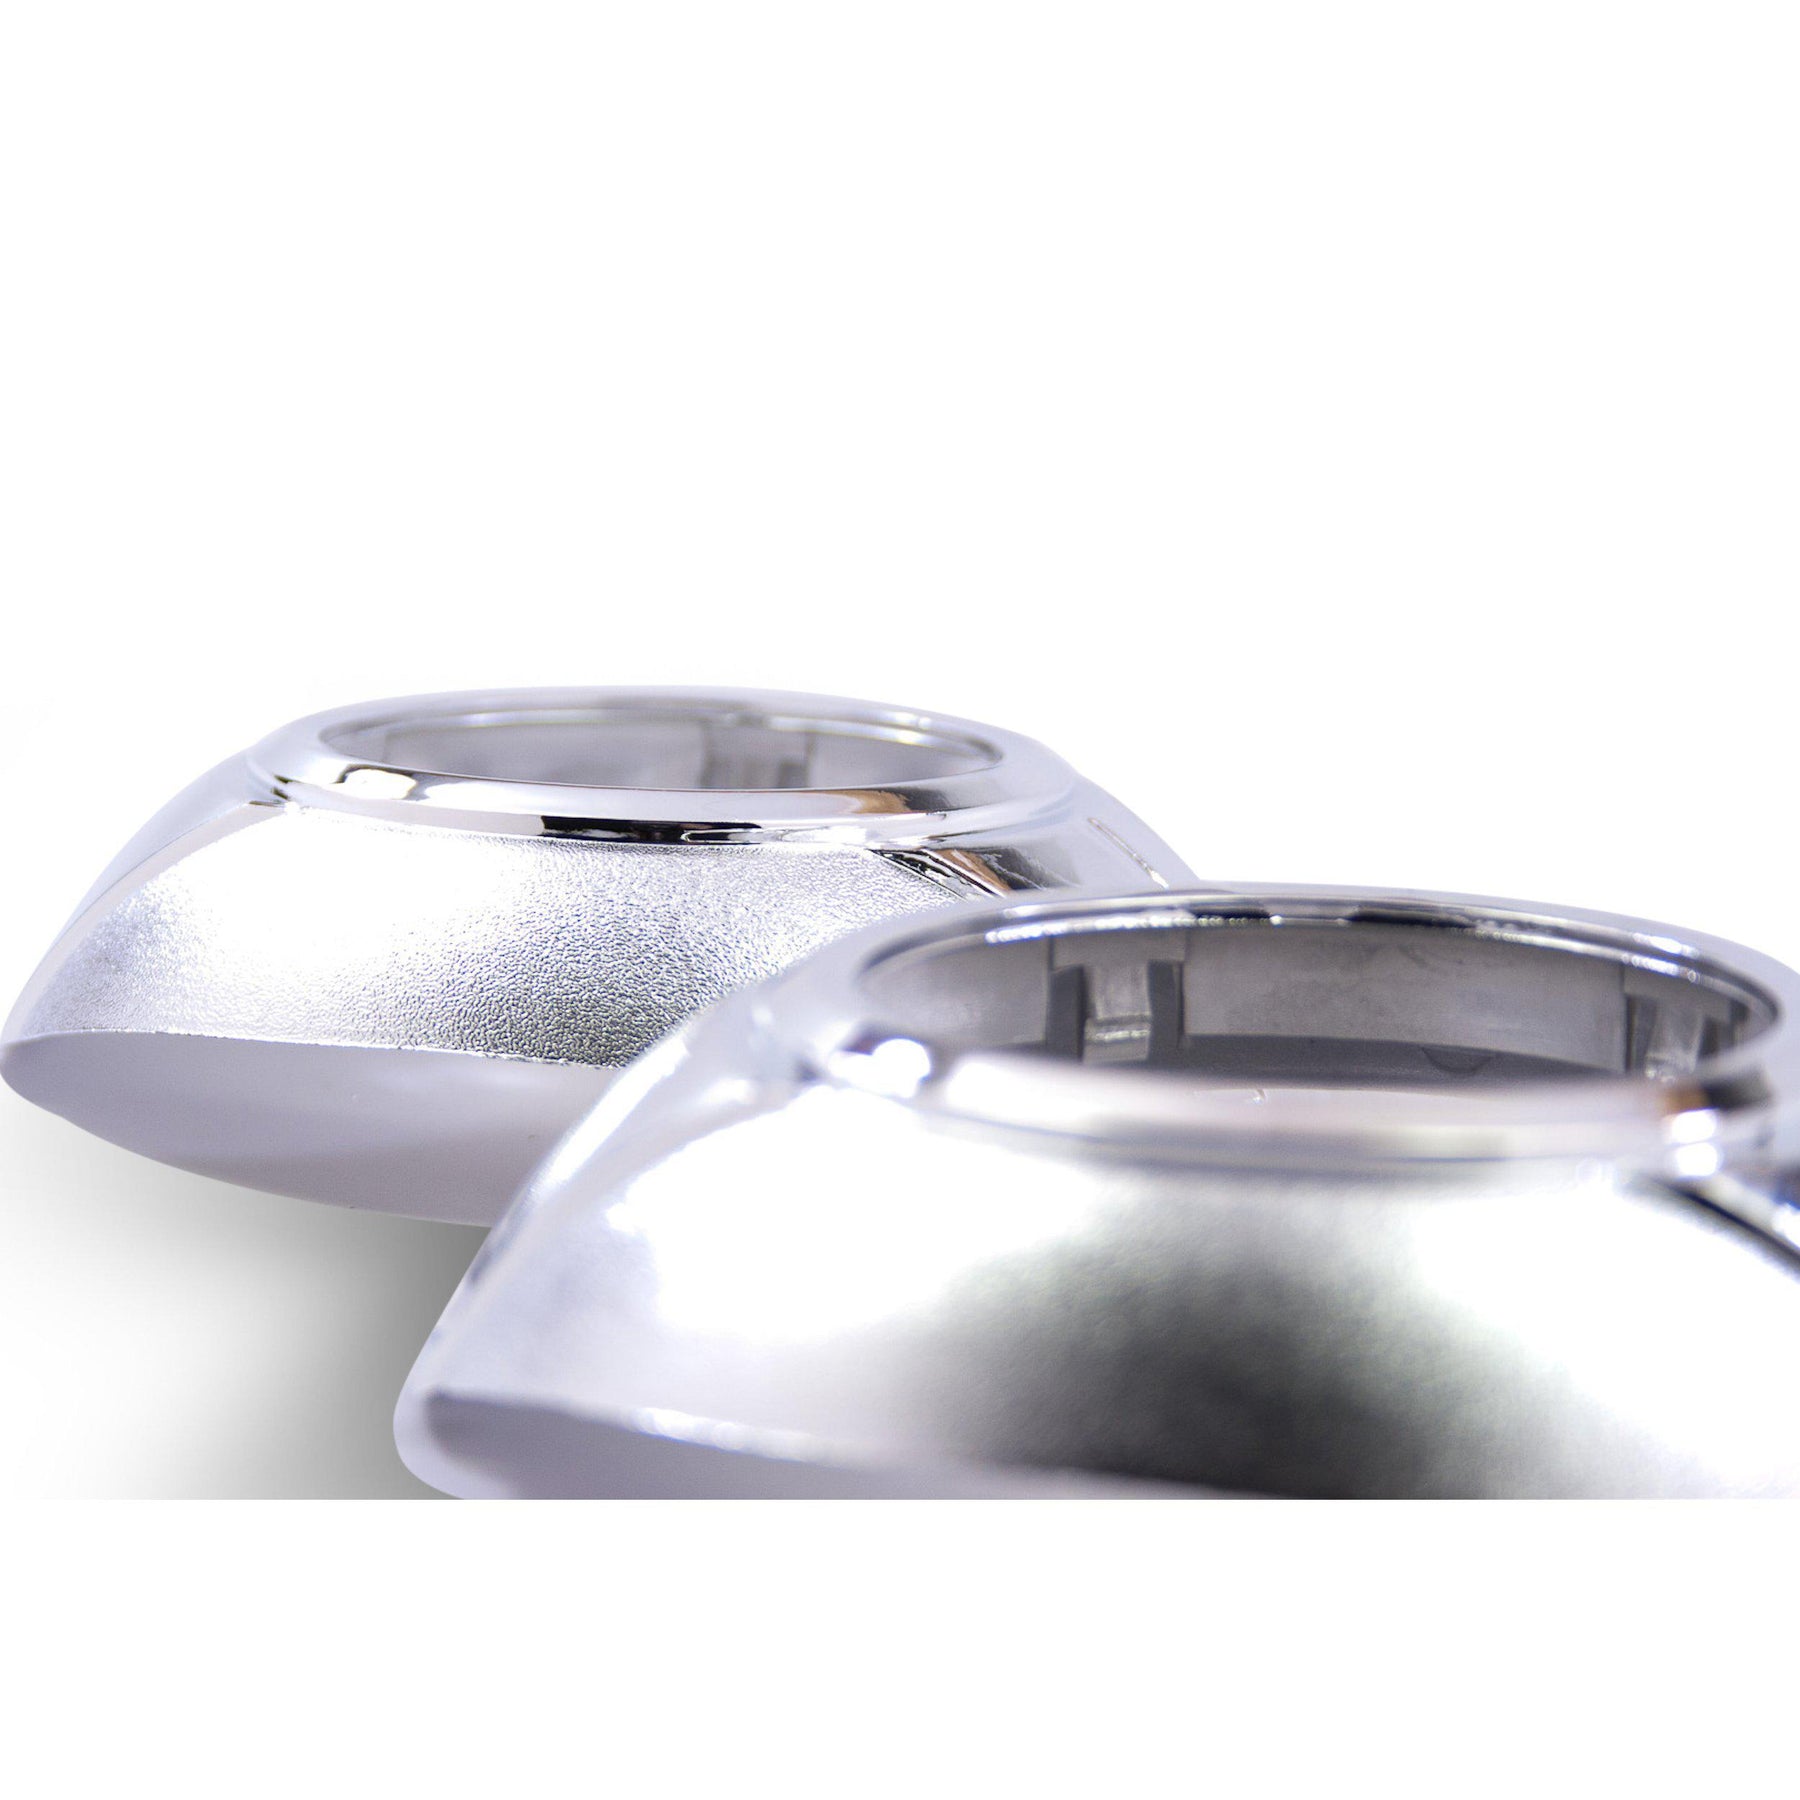 Ocular Shroud (S150)-Lighting Accessories-Morimoto-S150-Dirty Diesel Customs